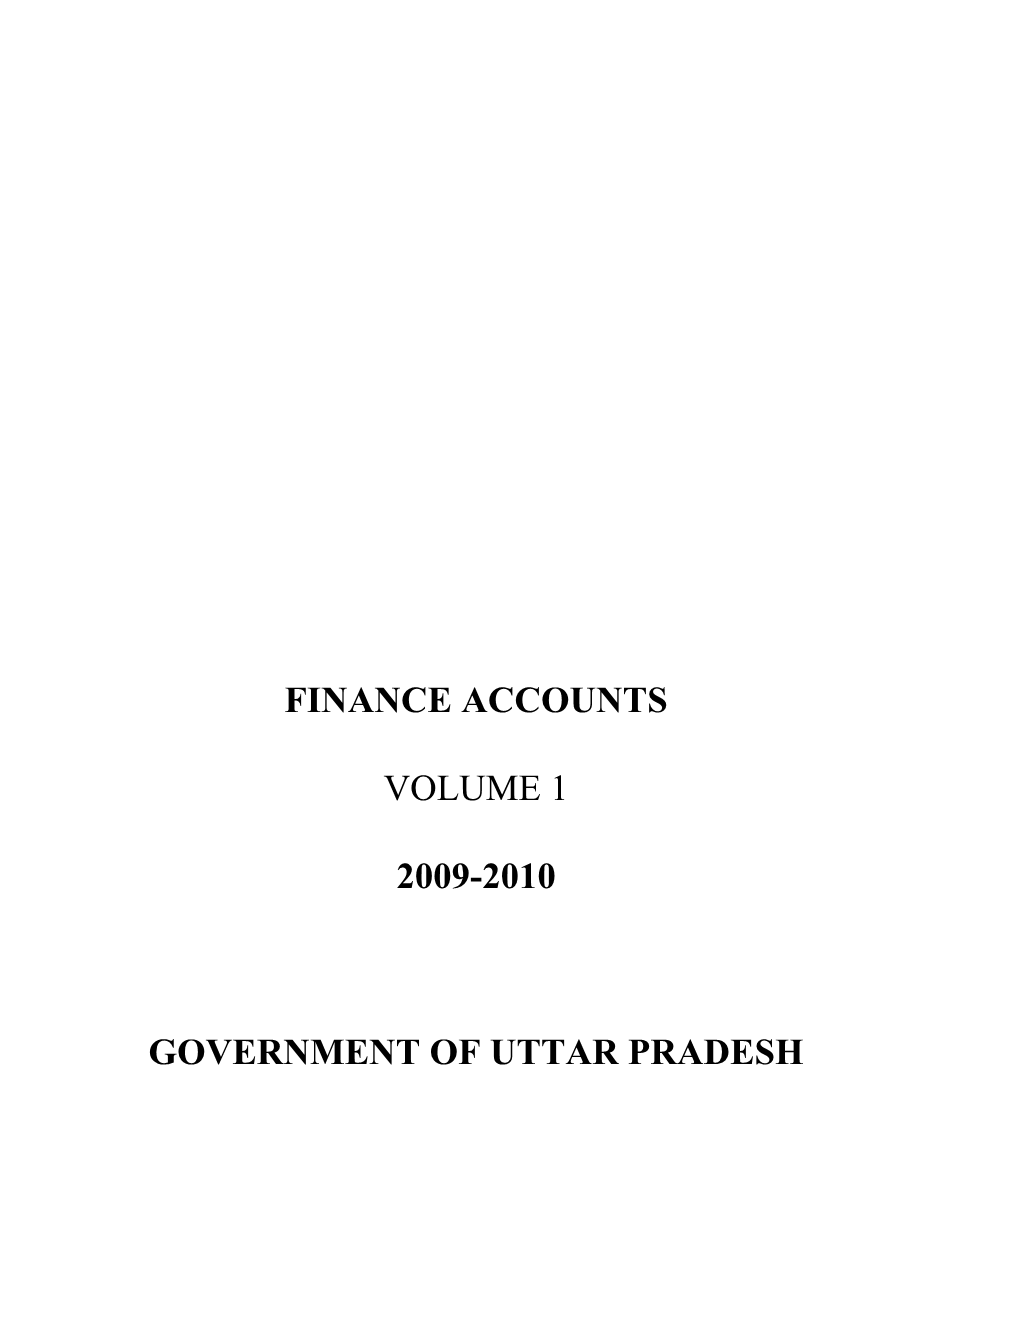 2009-2010 Government of Uttar Pradesh Finance Accounts Volume 1